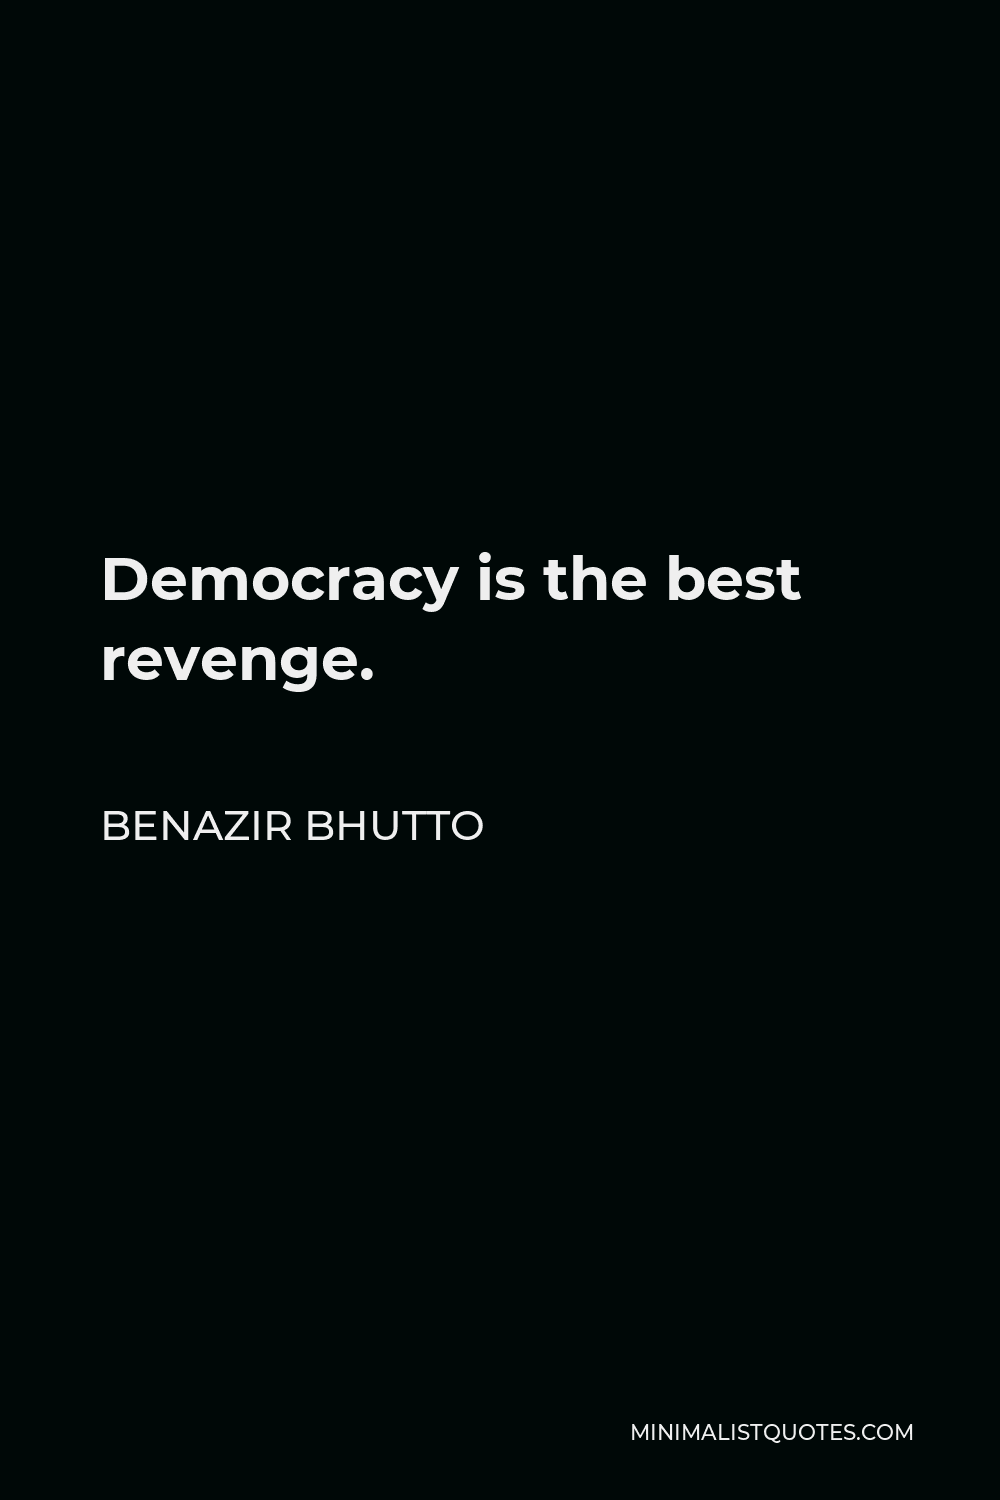 Benazir Bhutto Quote - Democracy is the best revenge.